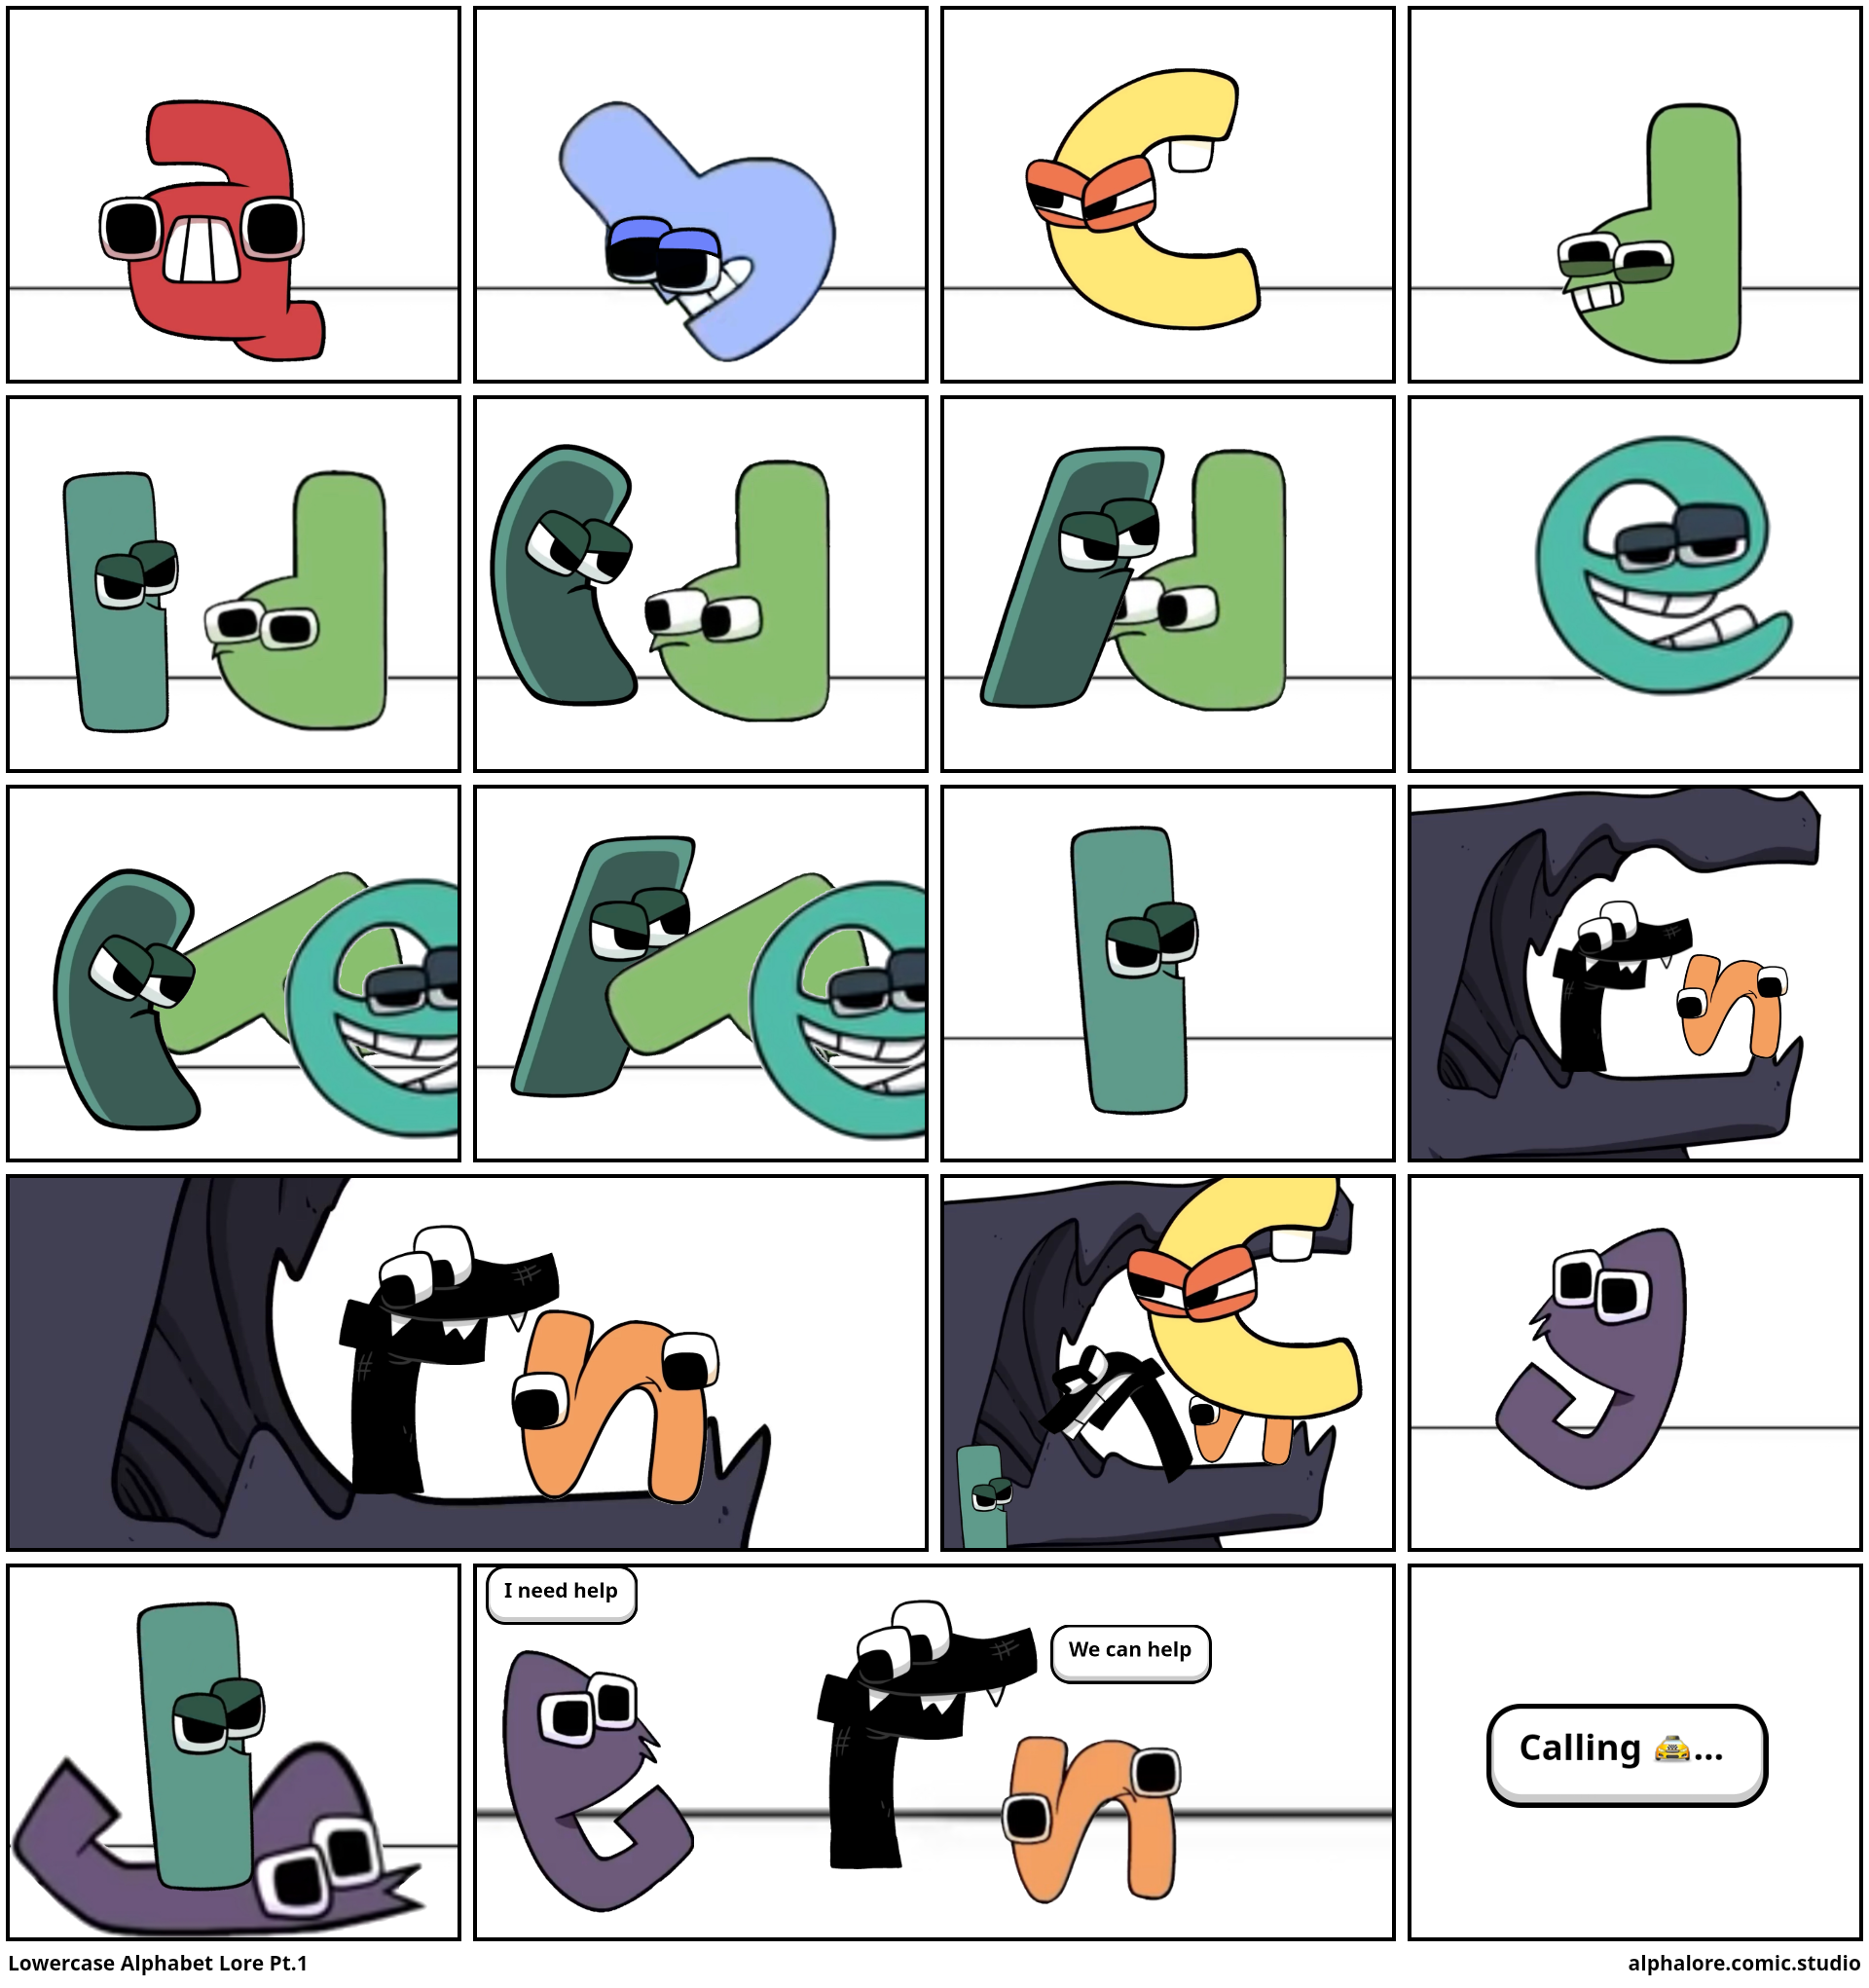 Alphabet Lore Lowercase Comic Studio - make comics & memes with Alphabet  Lore Lowercase characters